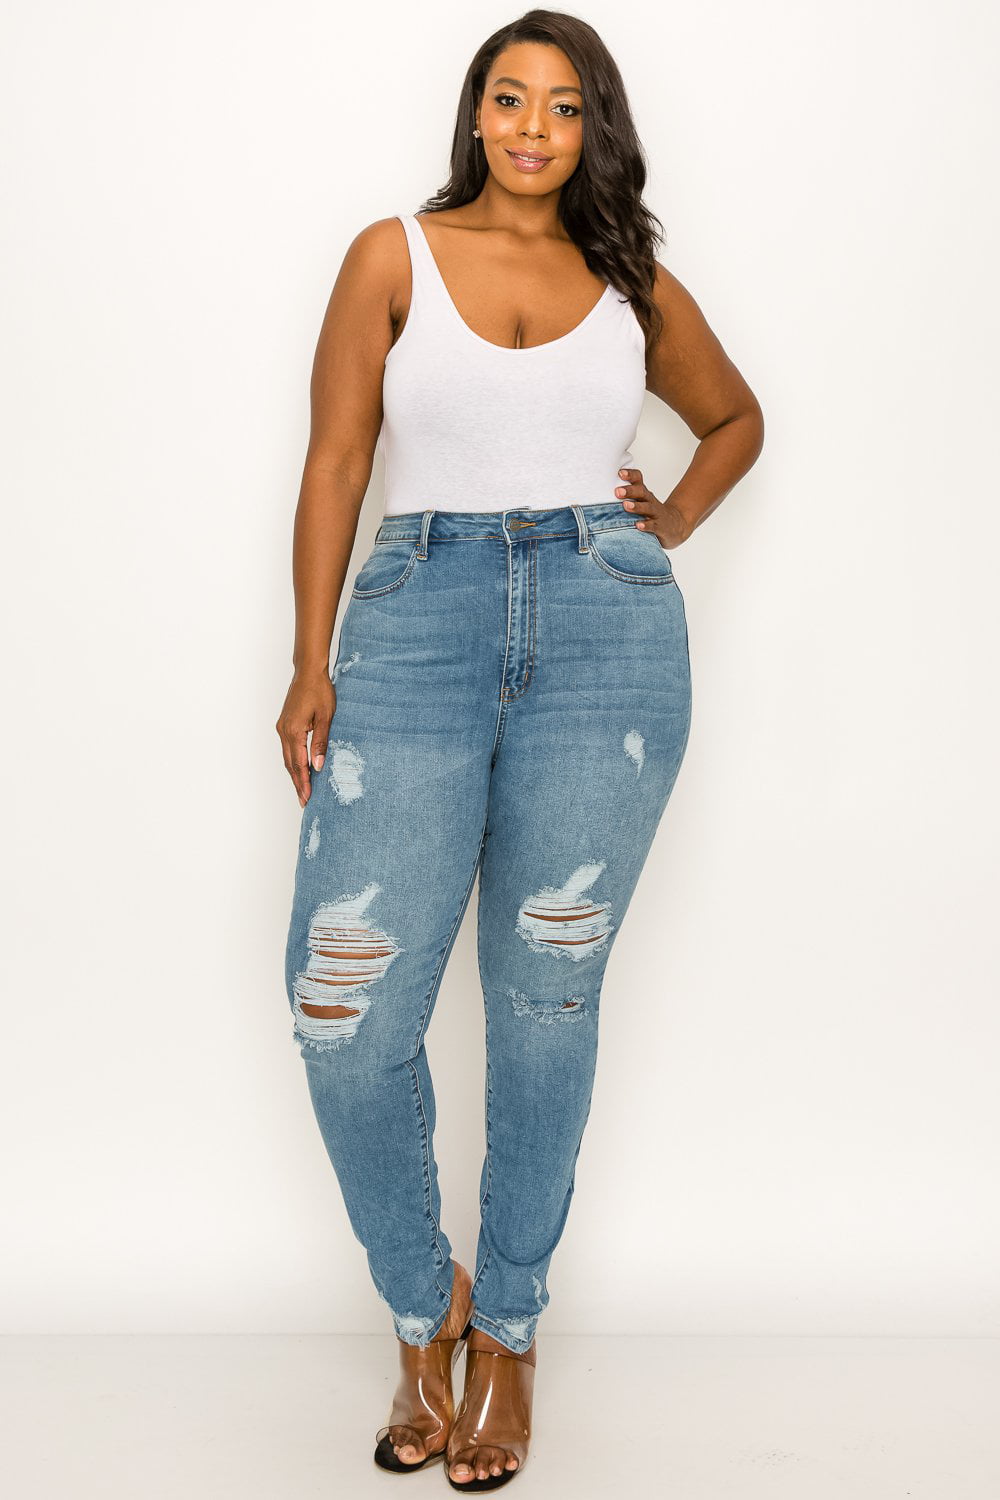 M.A.P Jeans Womens Plus Size Stretch Slim Fit Skinny Leg Mid Rise Jeans (1107P, 3XL) - Walmart.com